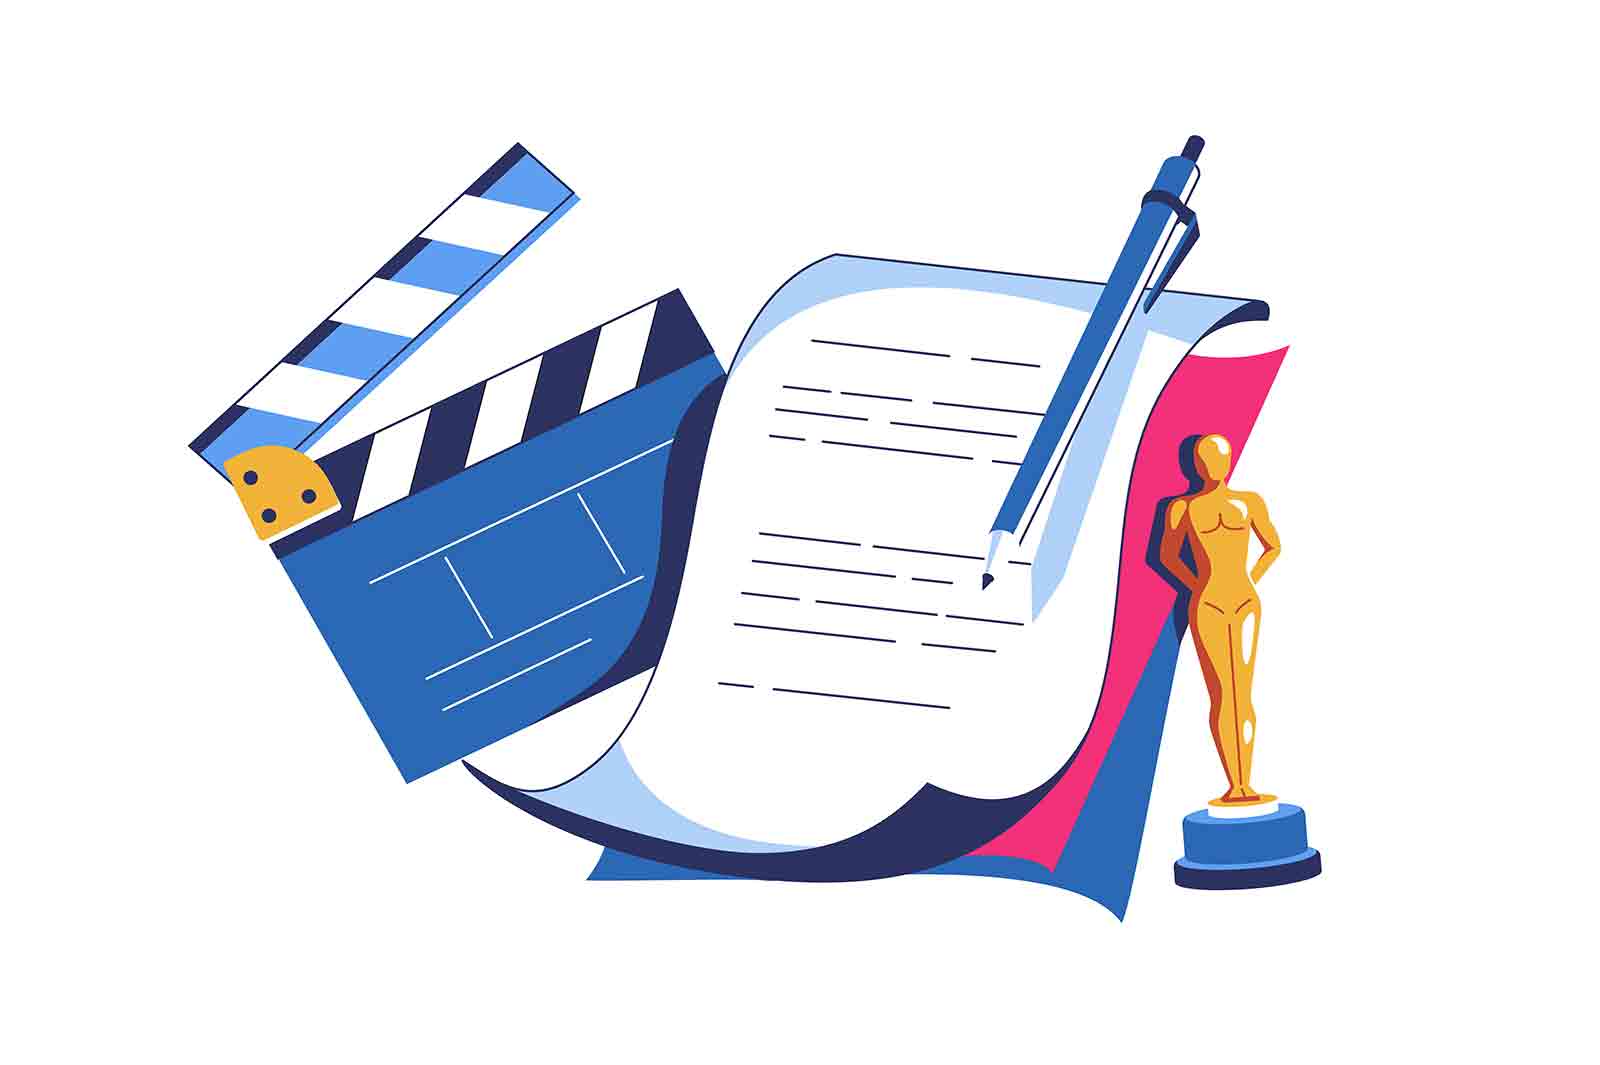 Skript for movie, cinematography or film production vector illustration. Clapperboard, script and oscar statuette flat concept